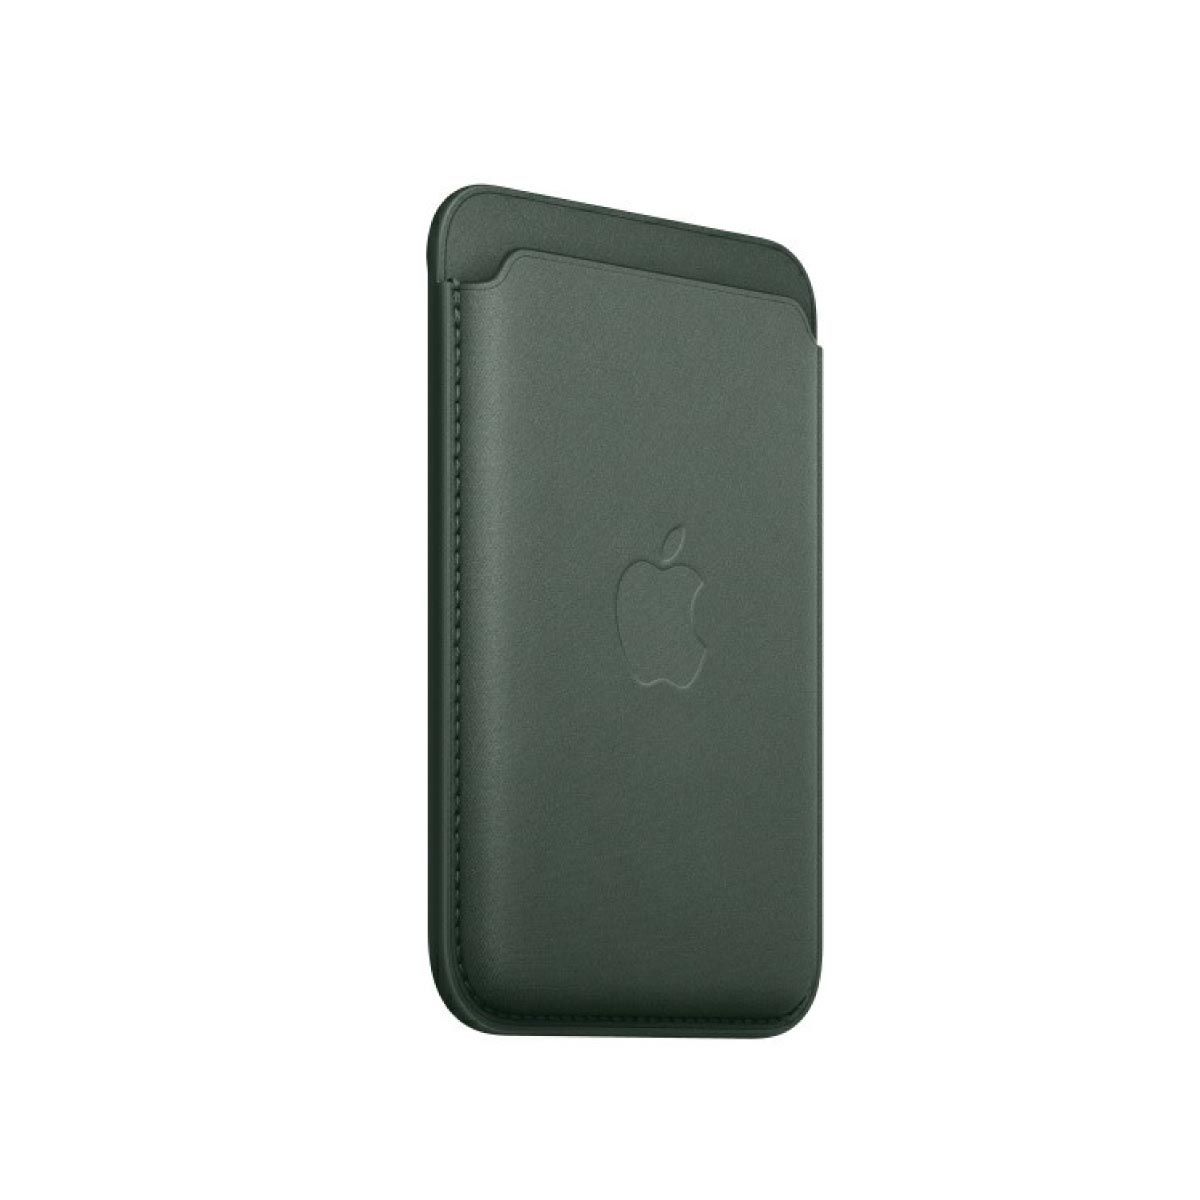 Apple Case เคสผ้า FineWoven แบบกระเป๋าสตางค์สำหรับ iPhone พร้อม MagSafe  - สีเขียวเอเวอร์กรีน